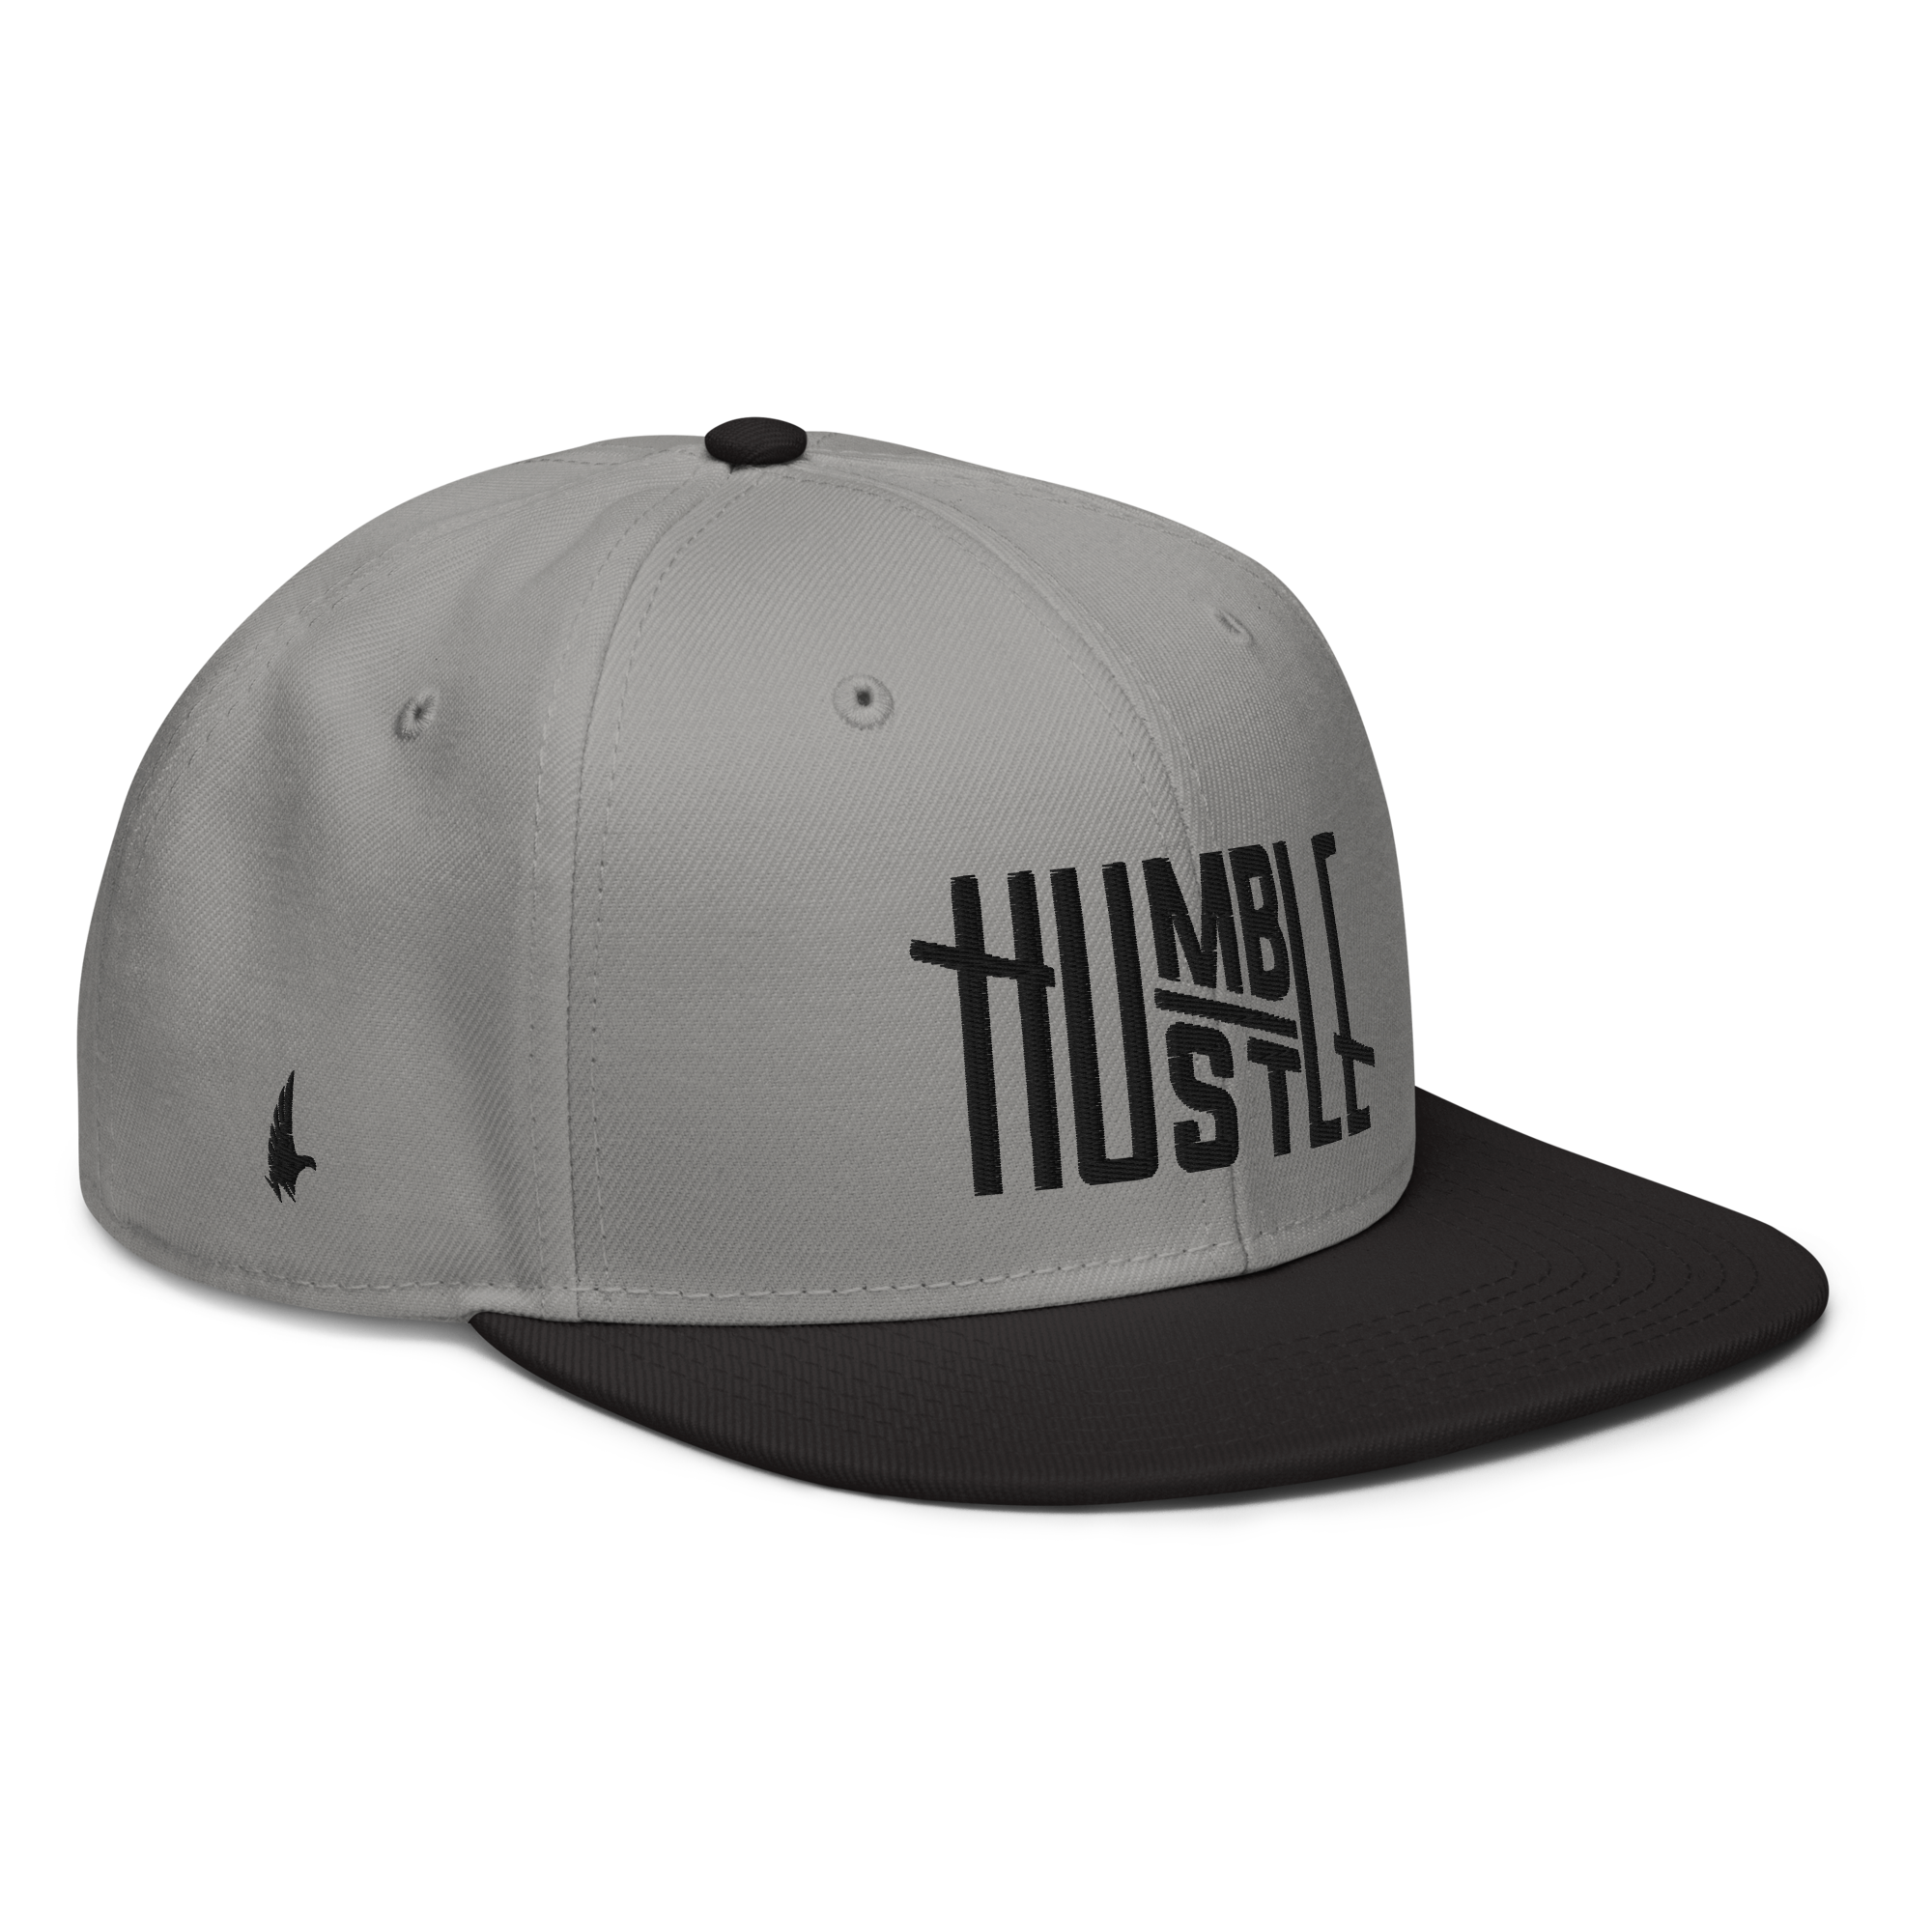 Humble Hustle Snapback Hat - Gray/Black/Black OS - Loyalty Vibes